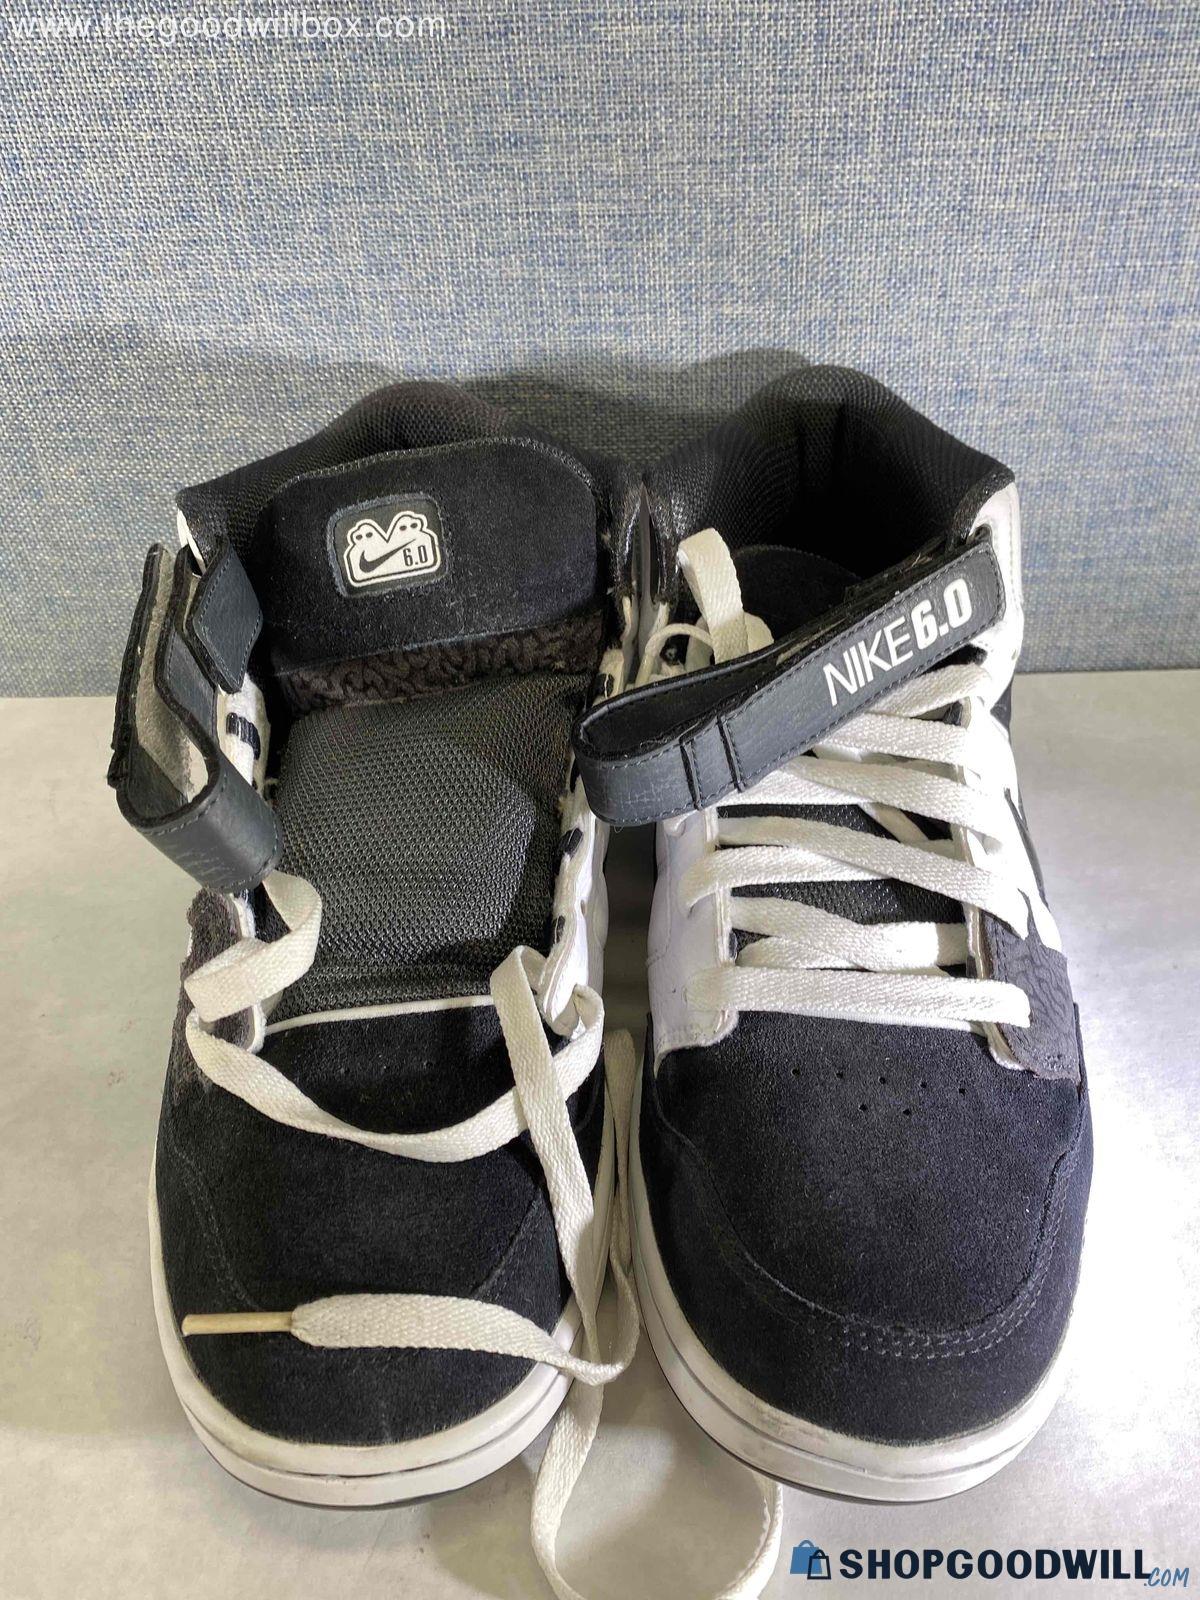 Nike, Men's Black& White Sneakers, Size 10 - shopgoodwill.com